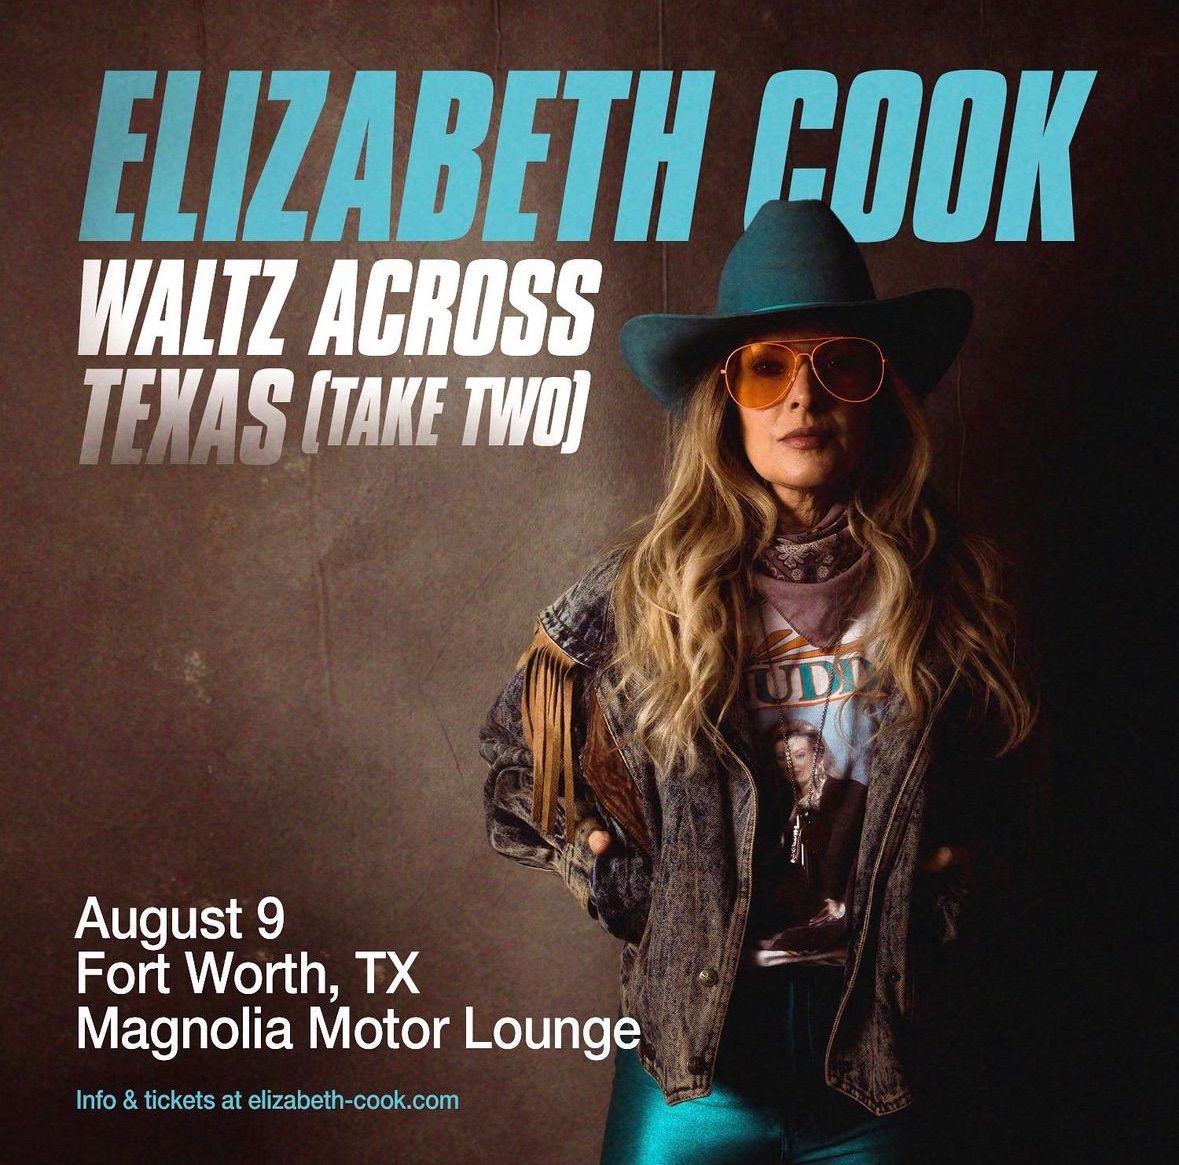 Elizabeth Cook at Magnolia Motor Lounge August 9th